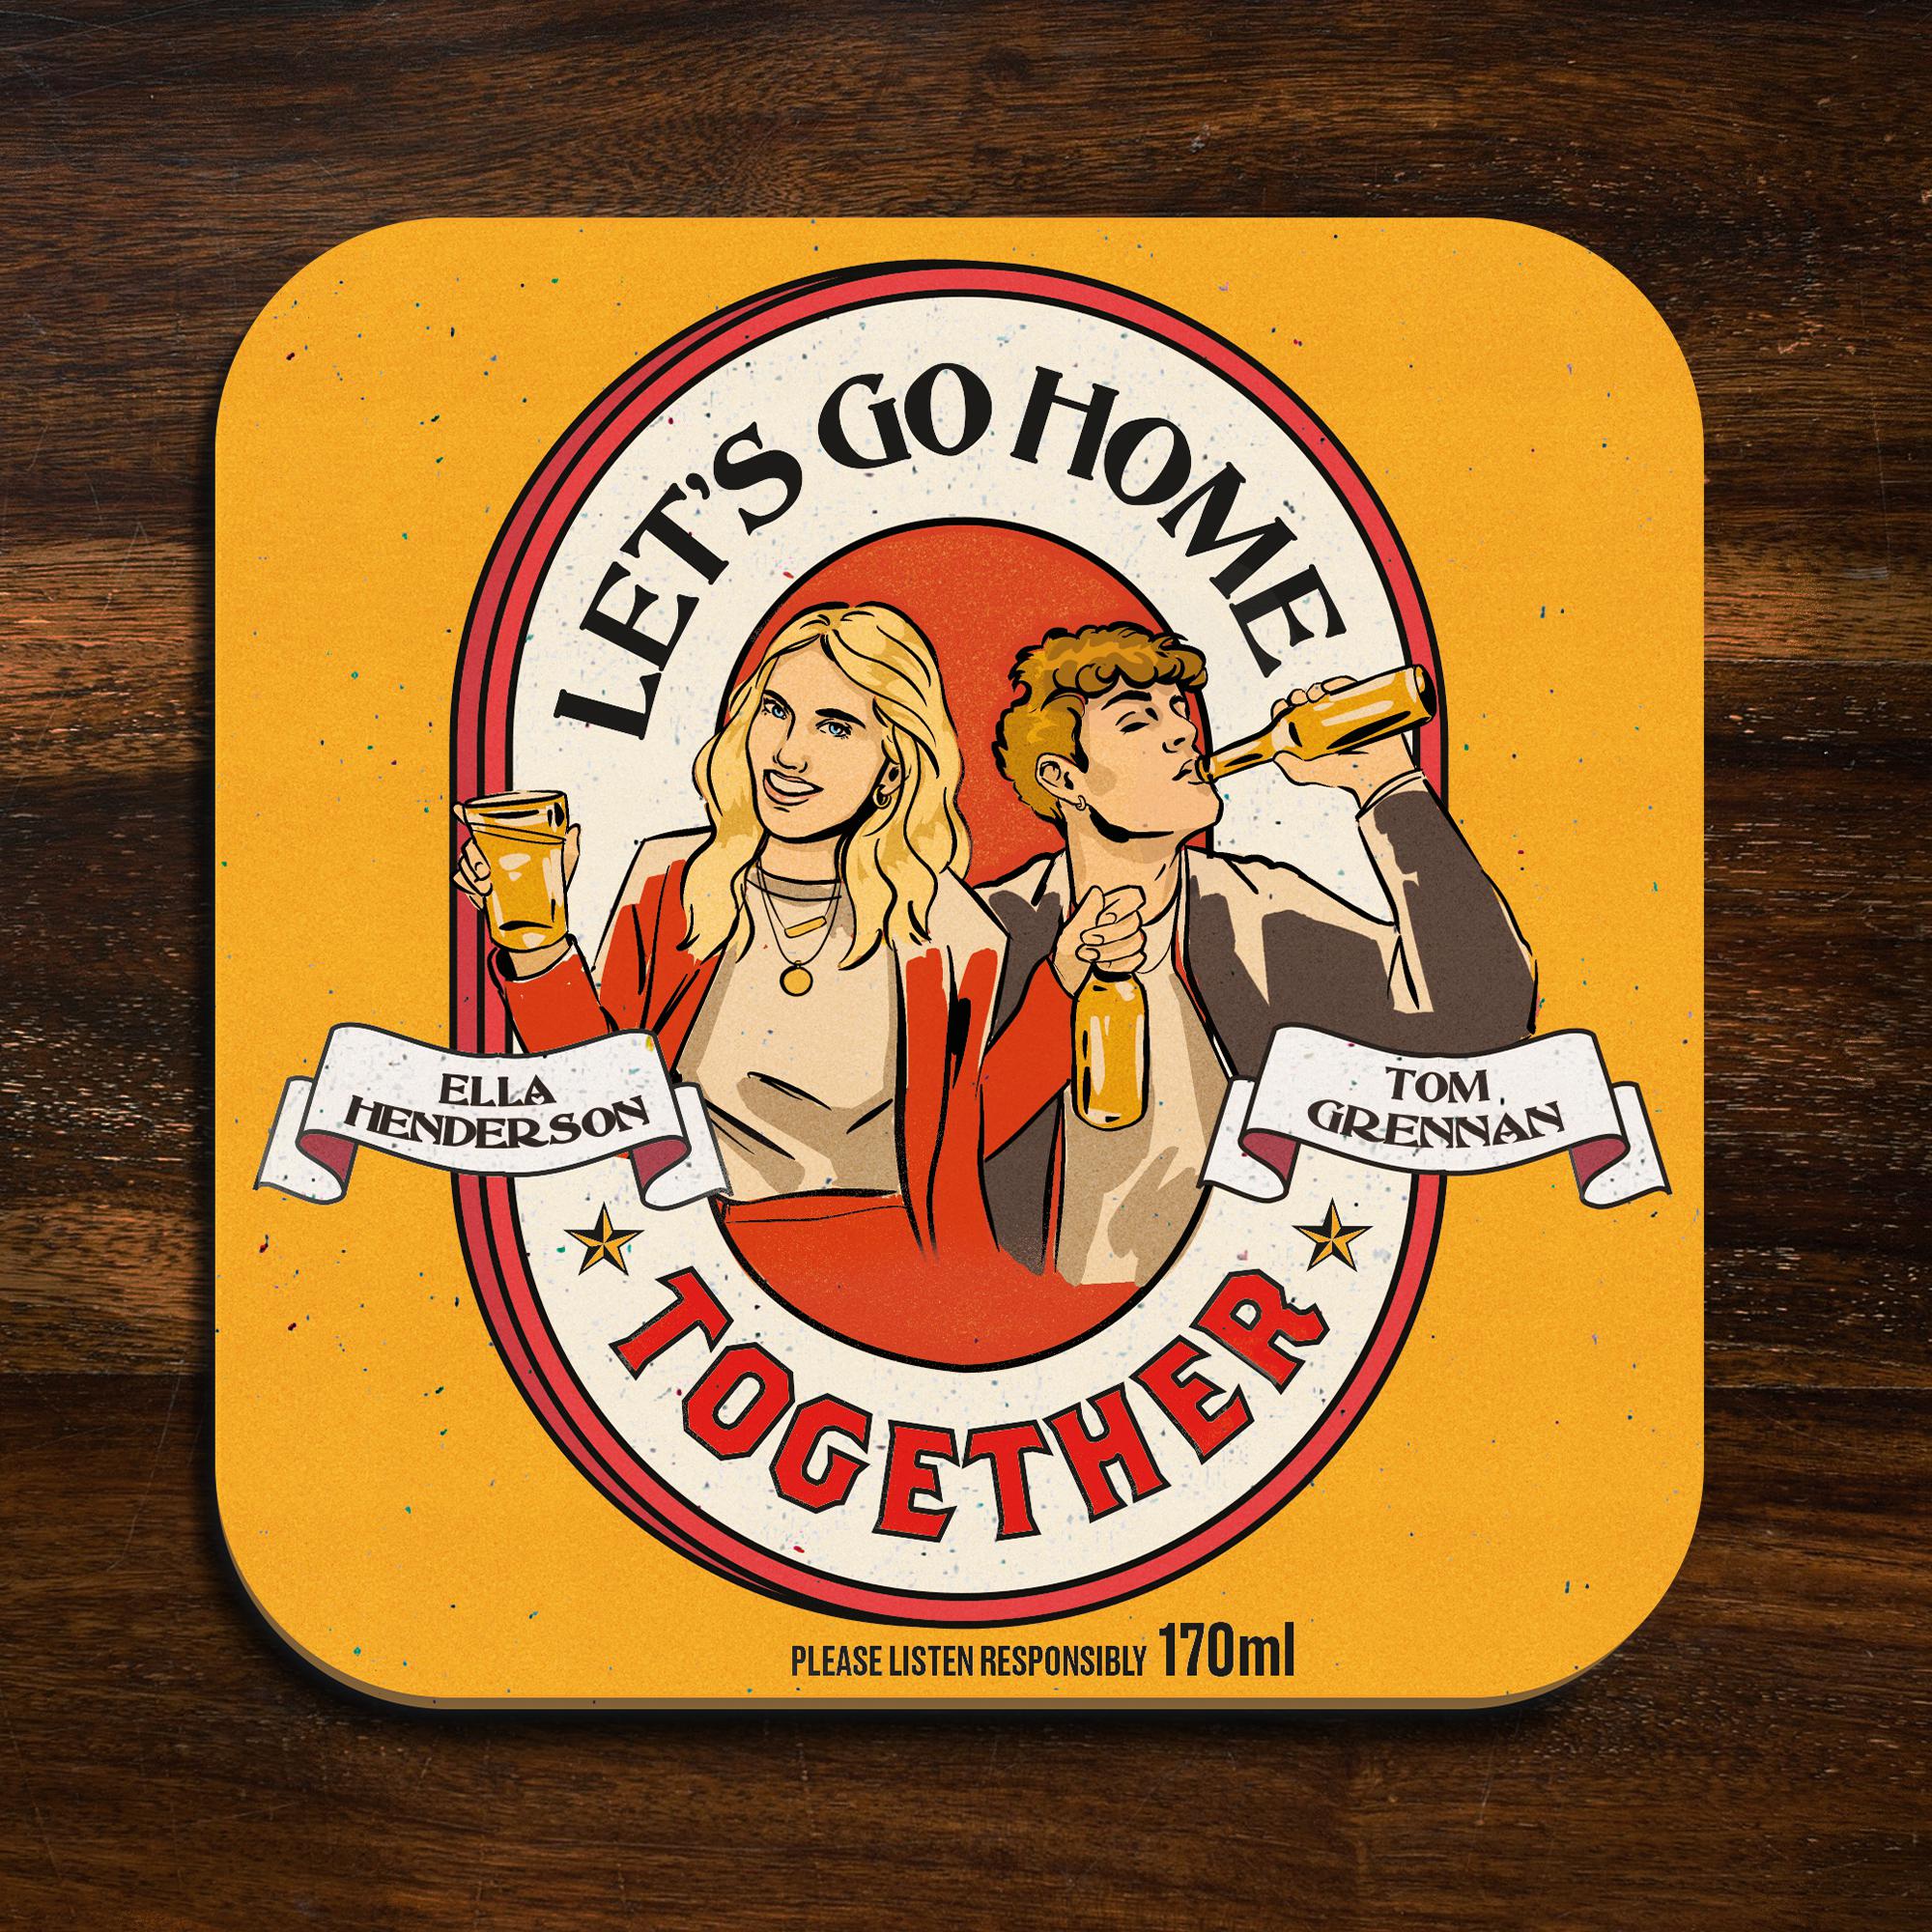 Let’s Go Home Together歌词 歌手Ella Henderson / Tom Grennan-专辑Let’s Go Home Together-单曲《Let’s Go Home Together》LRC歌词下载